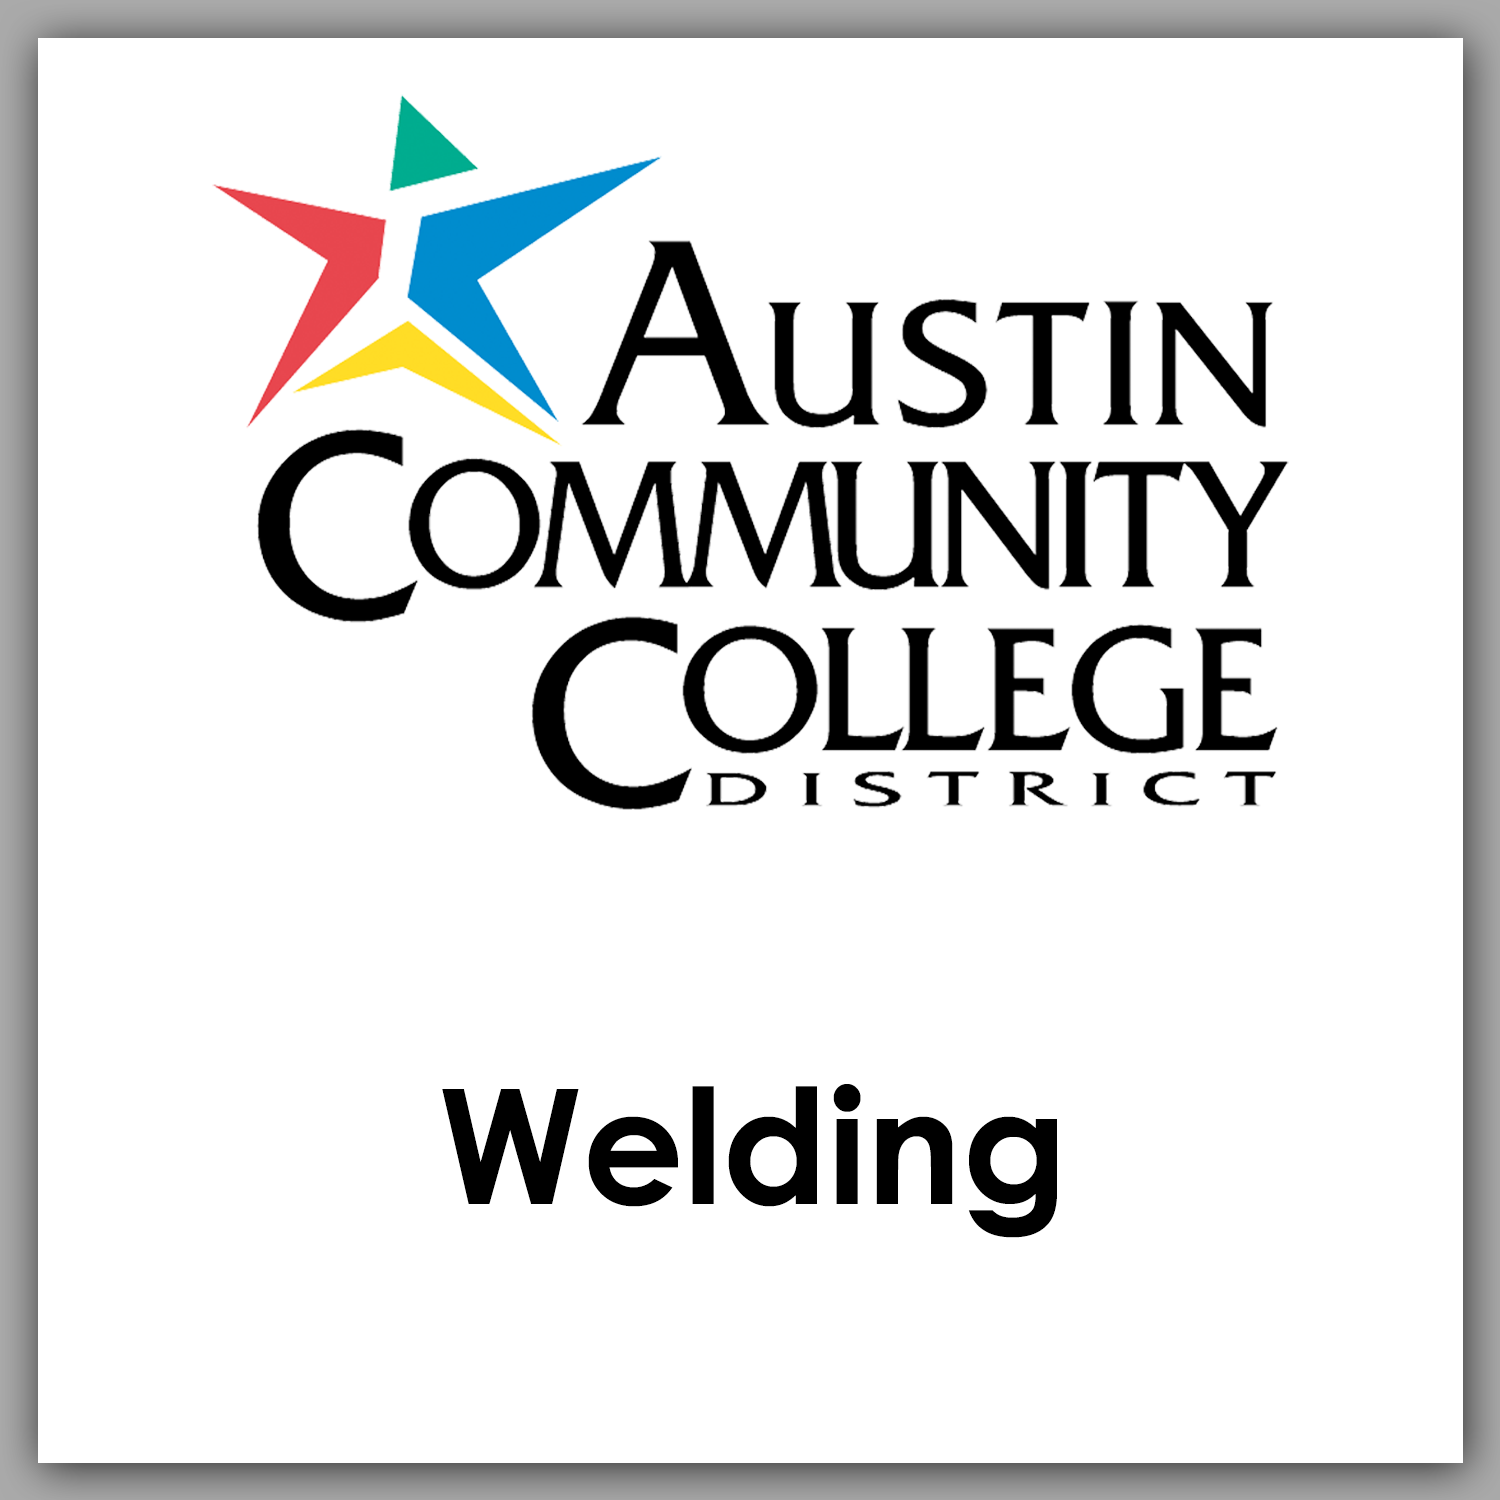 Austin Community College Welding Dictionary